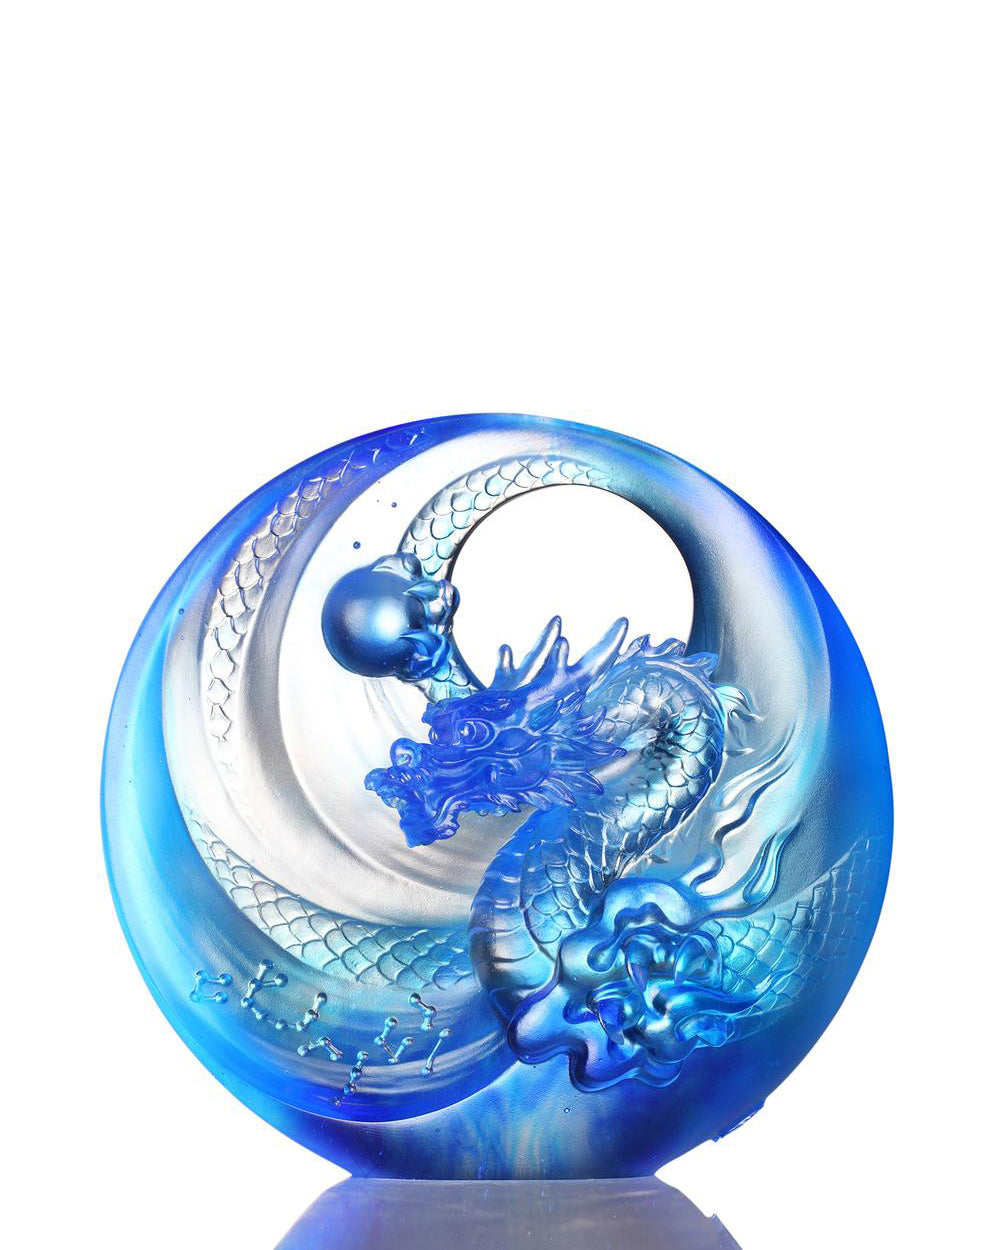 LIULI Crystal Art Crystal Mythical Creatures, Set of 5, Dragon, Vermillion Bird, Qilin, Tiger, Tortoise (Dark set)